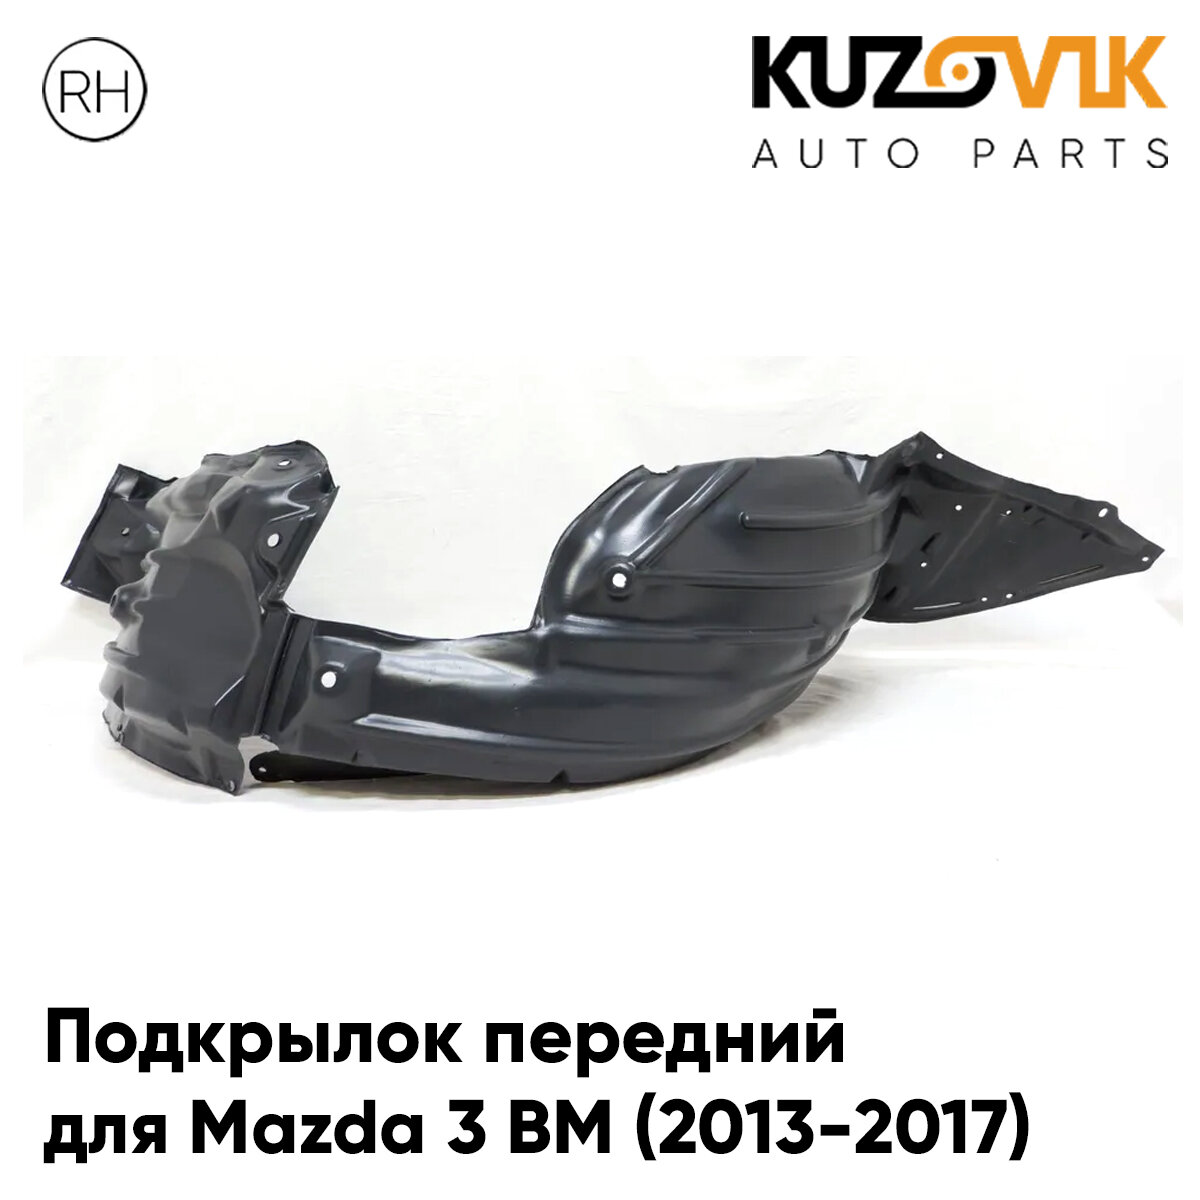 Подкрылок передний для Мазда 3 ВМ Mazda 3 BM (2013-2017) правый